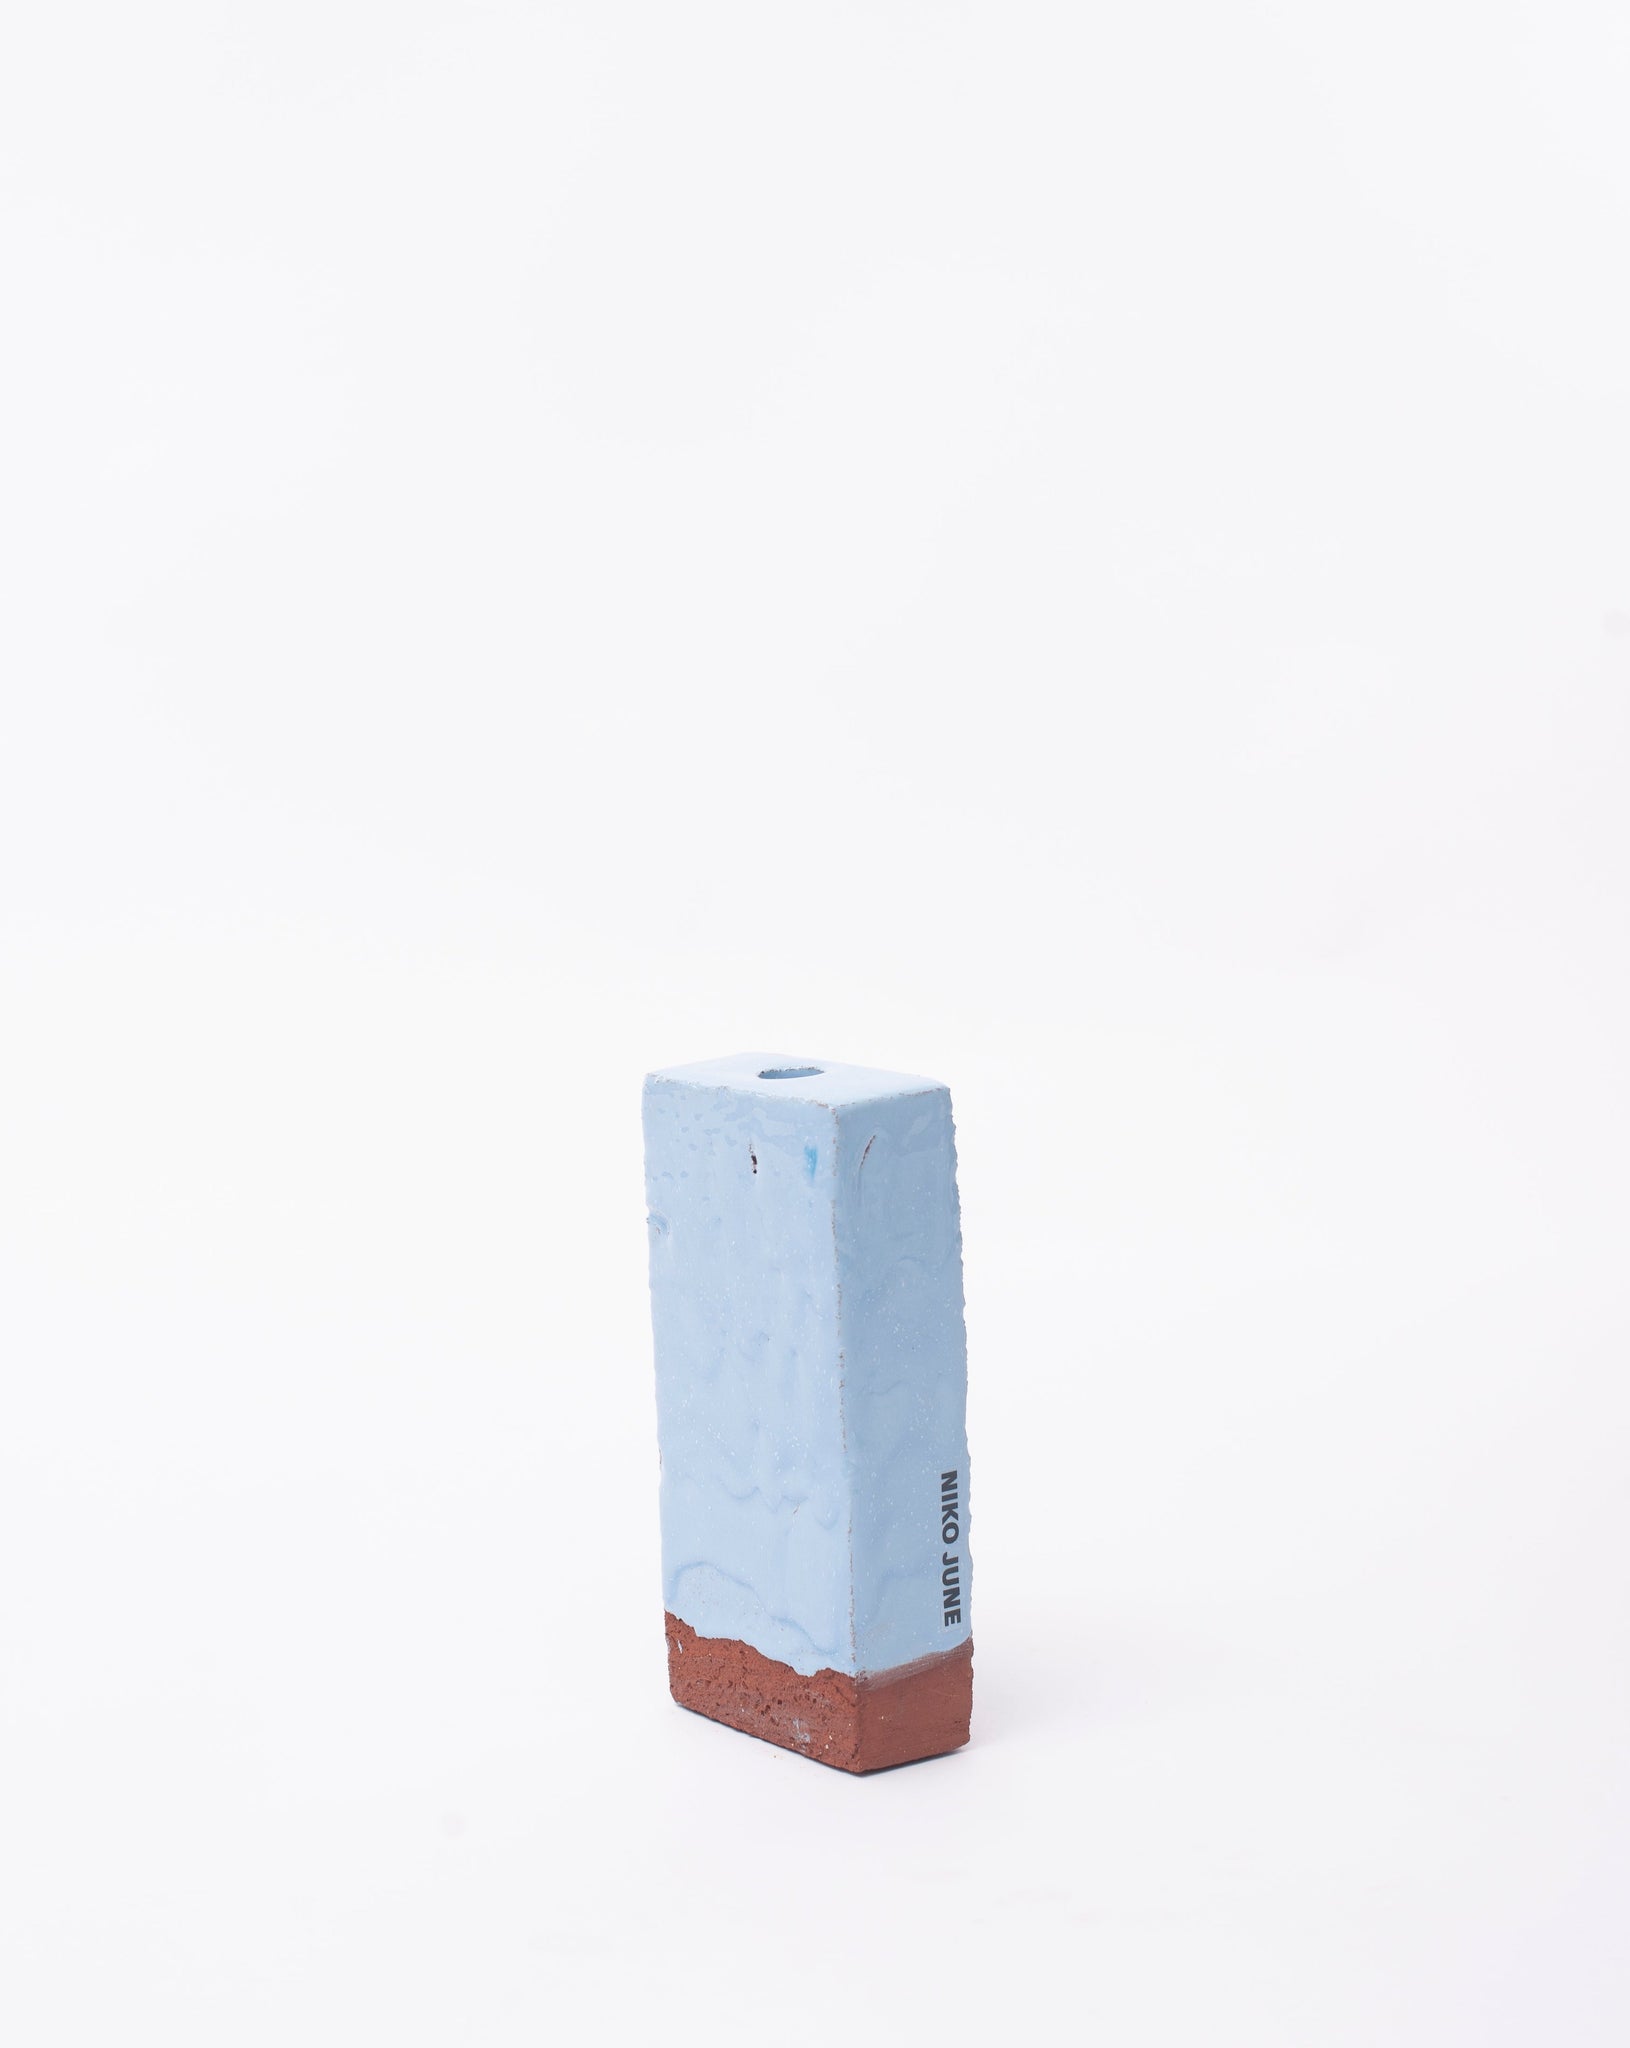 A Single Brick Candle